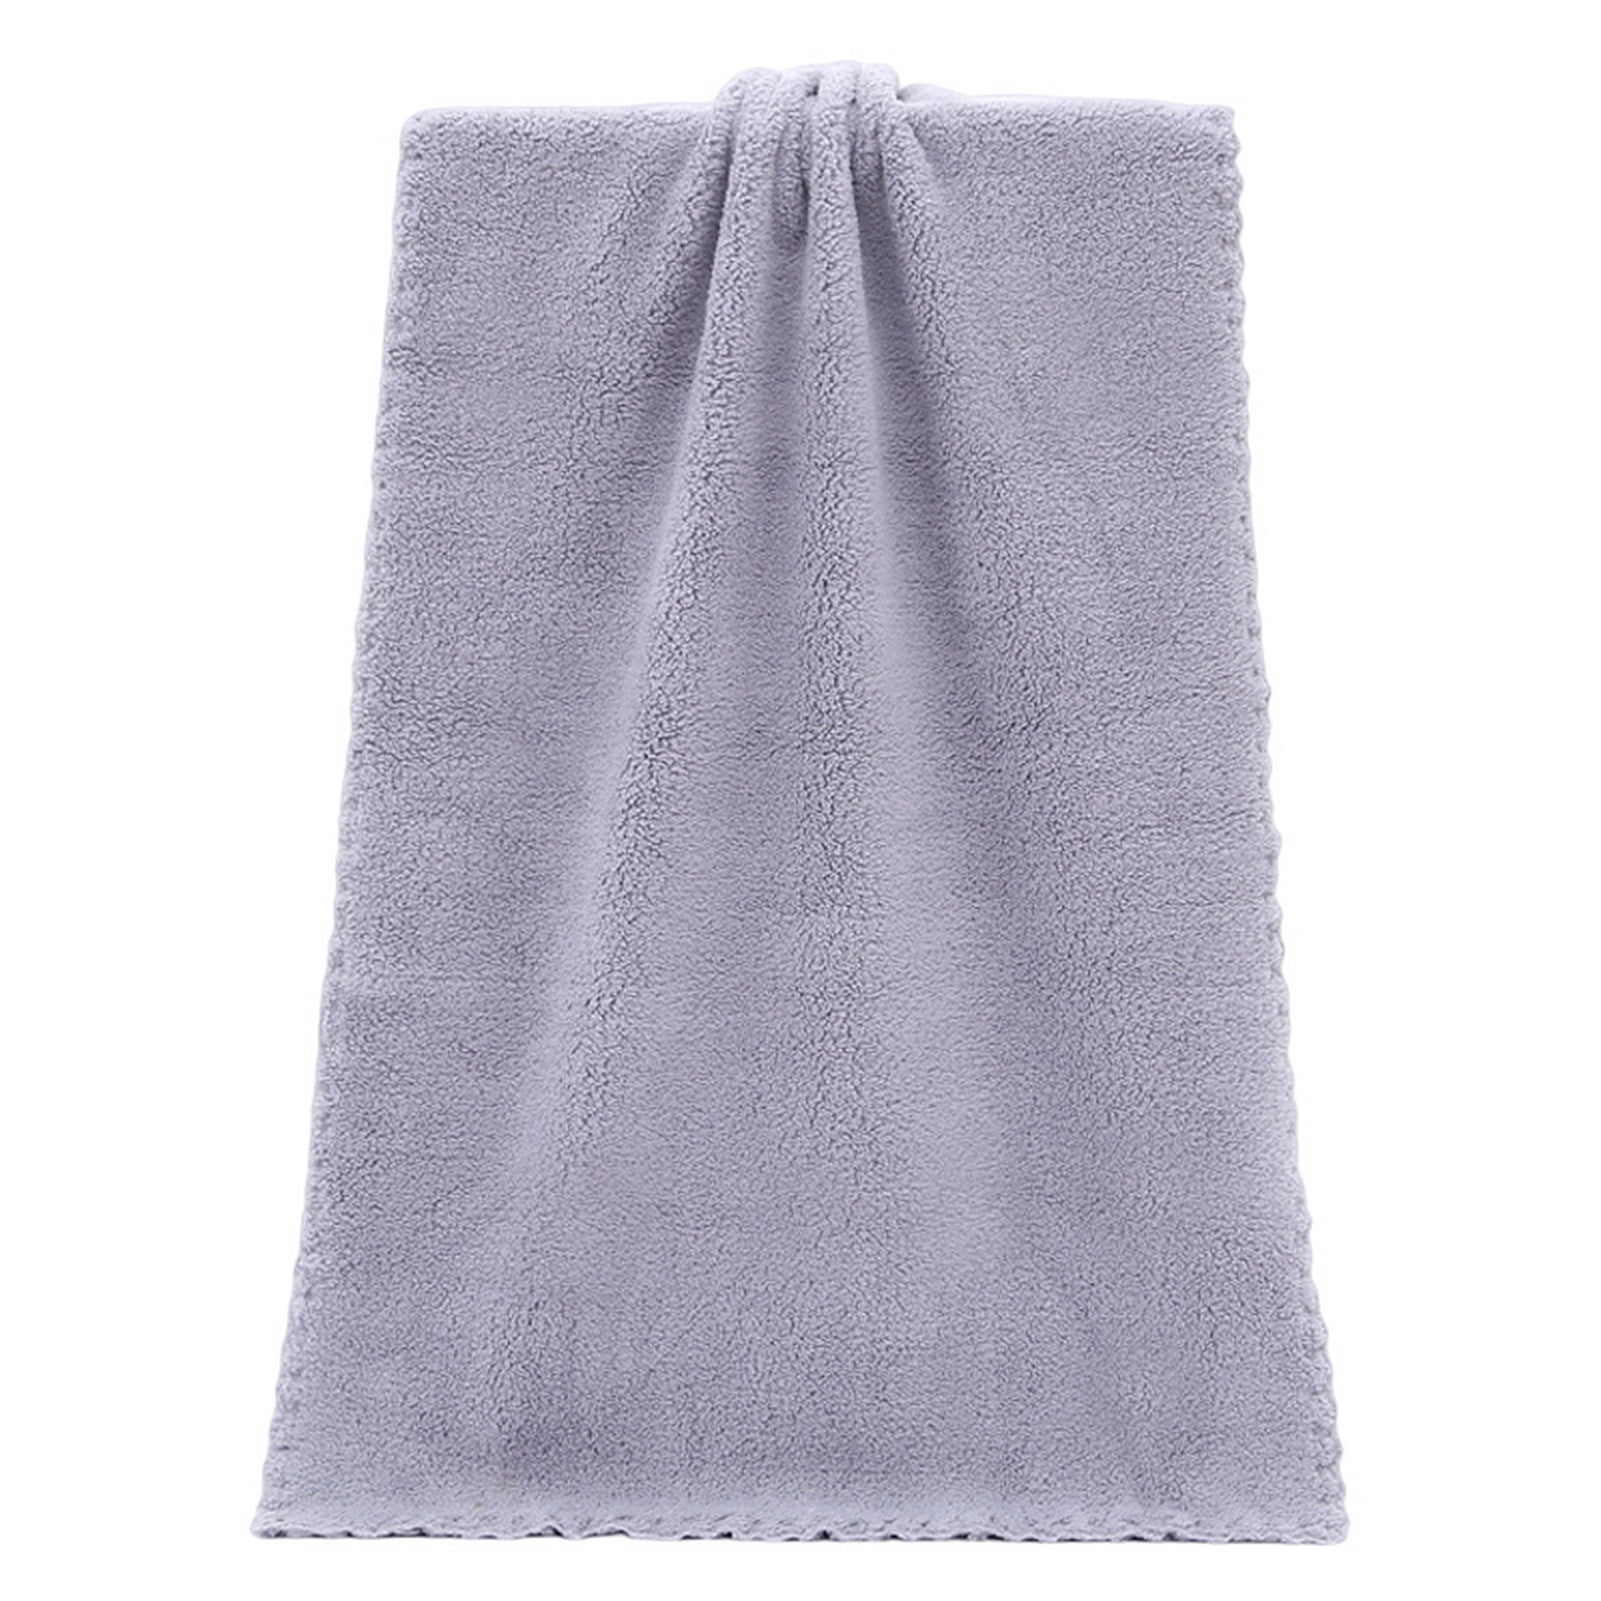 Wovilon 14X30 Inches Cotton Bathroom Hand Towels (Blue), Rags and Towels,  Hand Towels for Bathroom, Absorbent Superfine Fiber Soft Wash Cloths